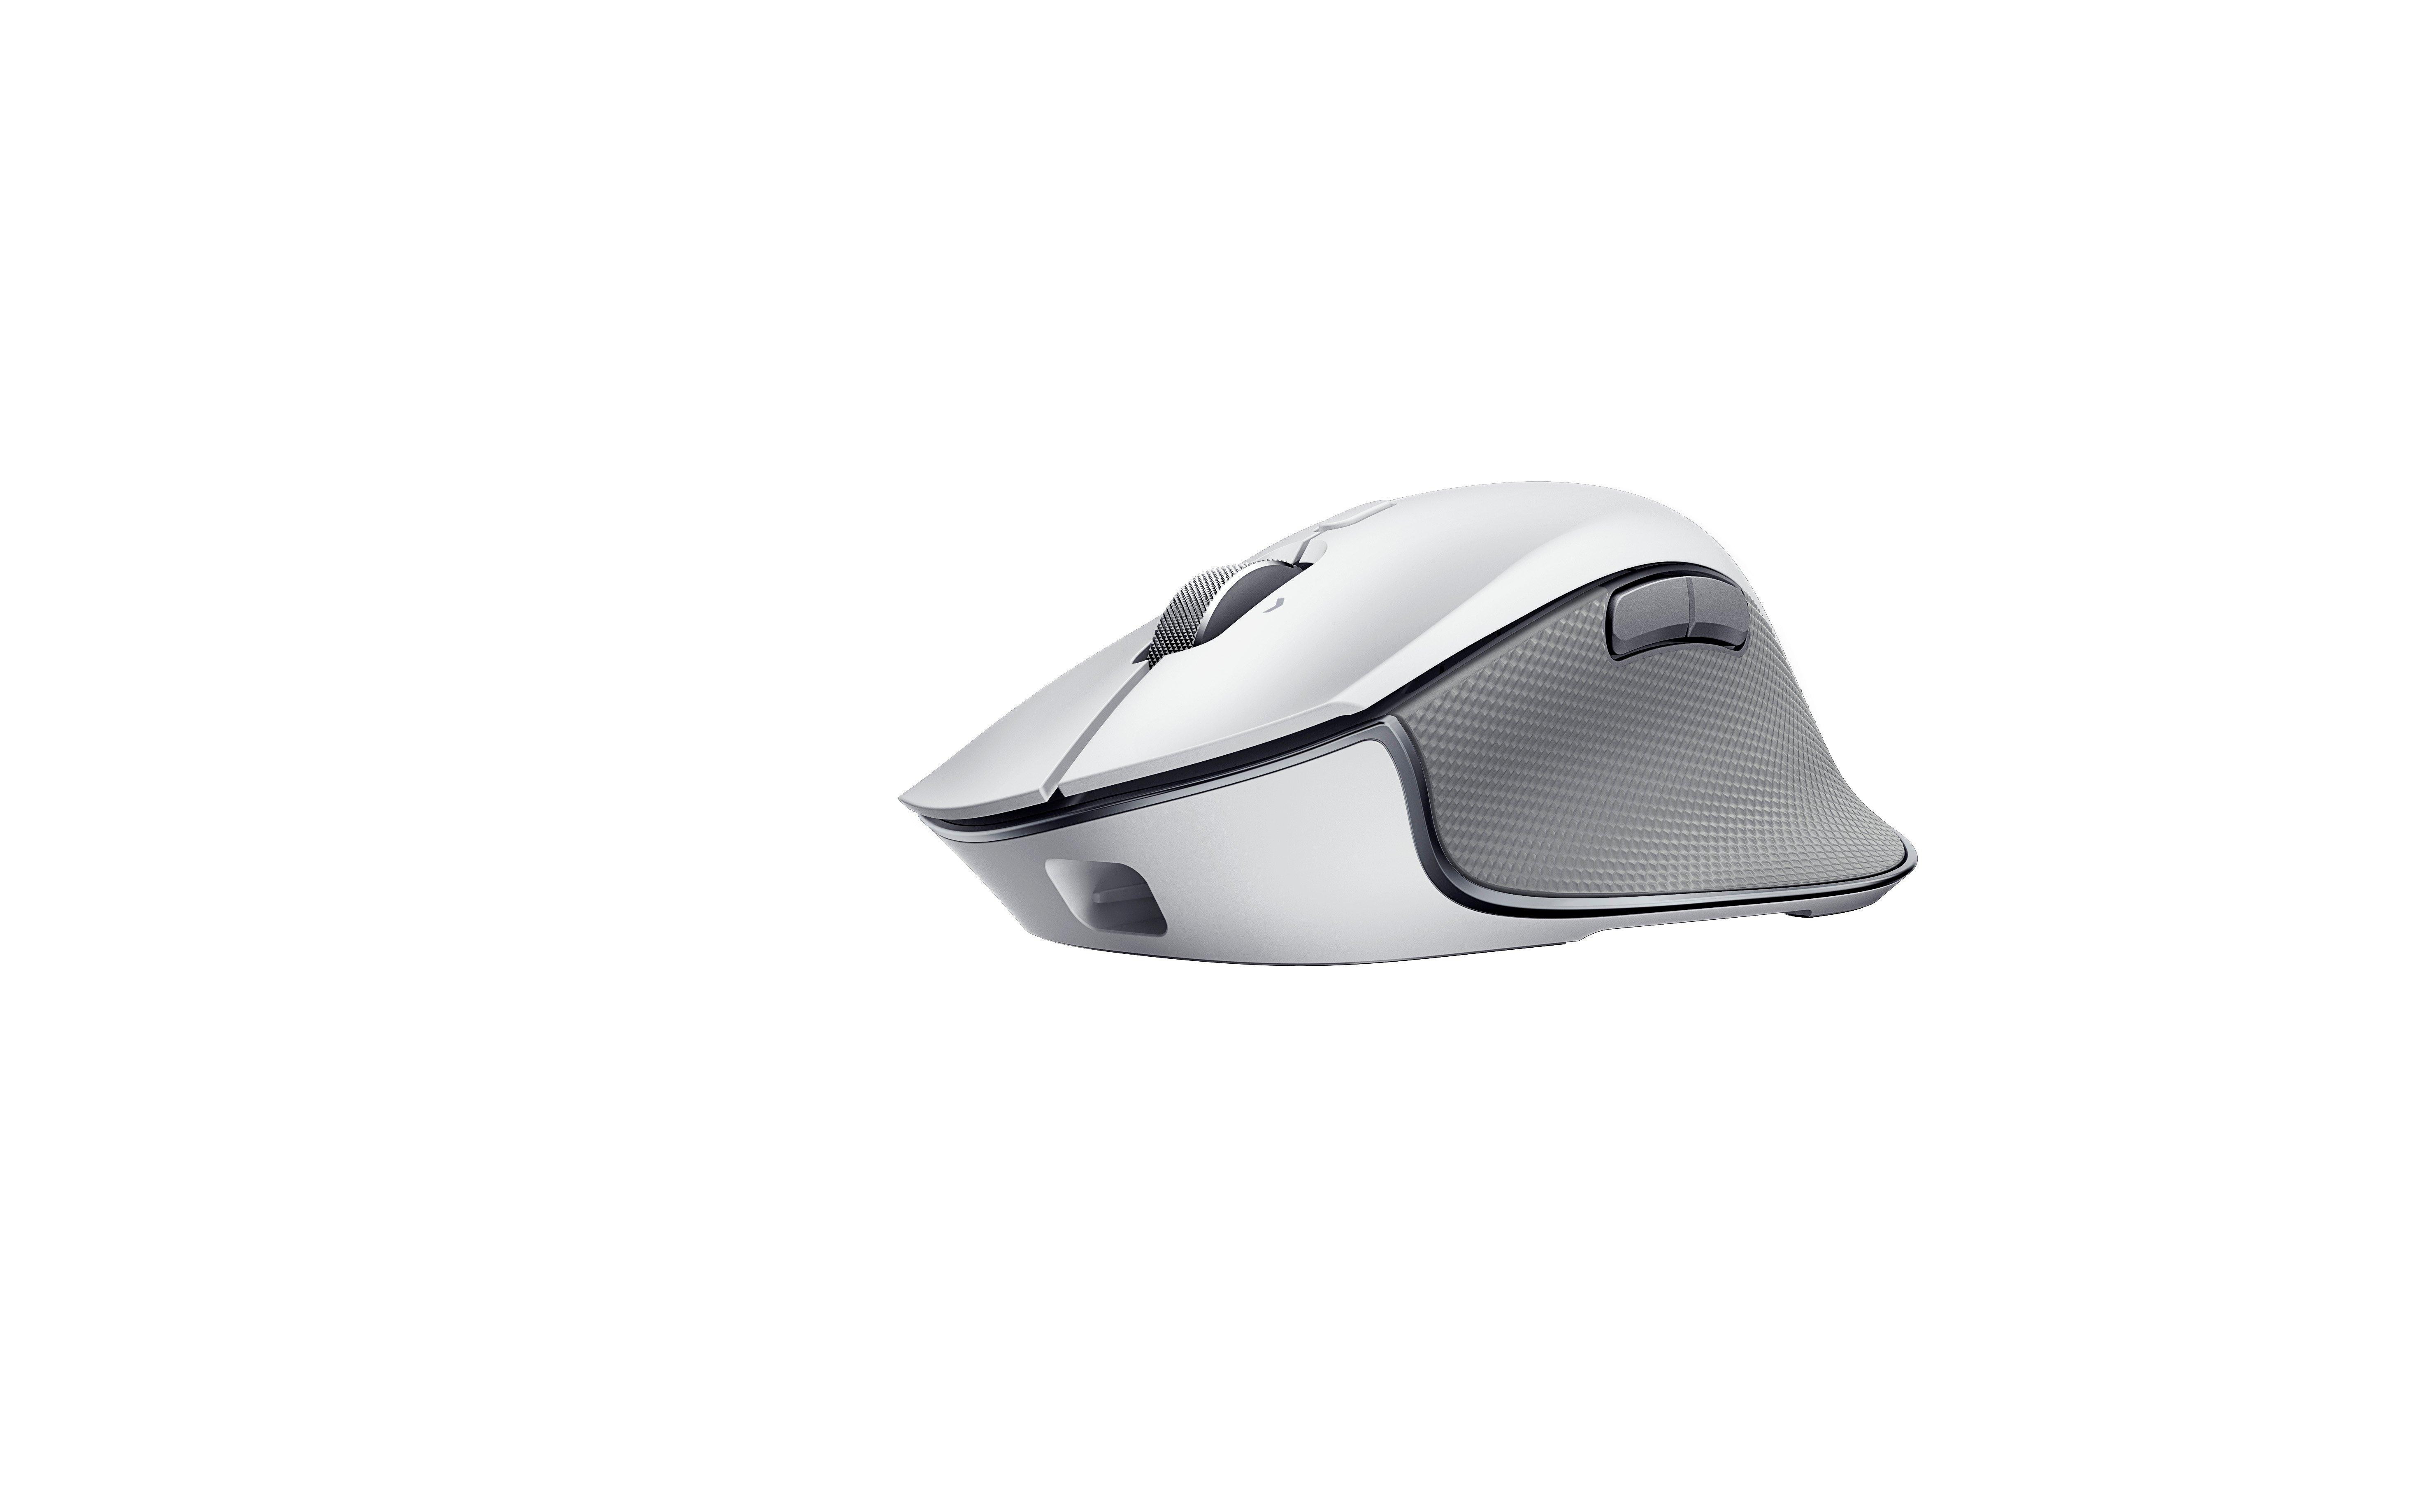 Razer Pro Click Mercury Ergonomic Form Factor Wireless Mouse Designed with Humanscale